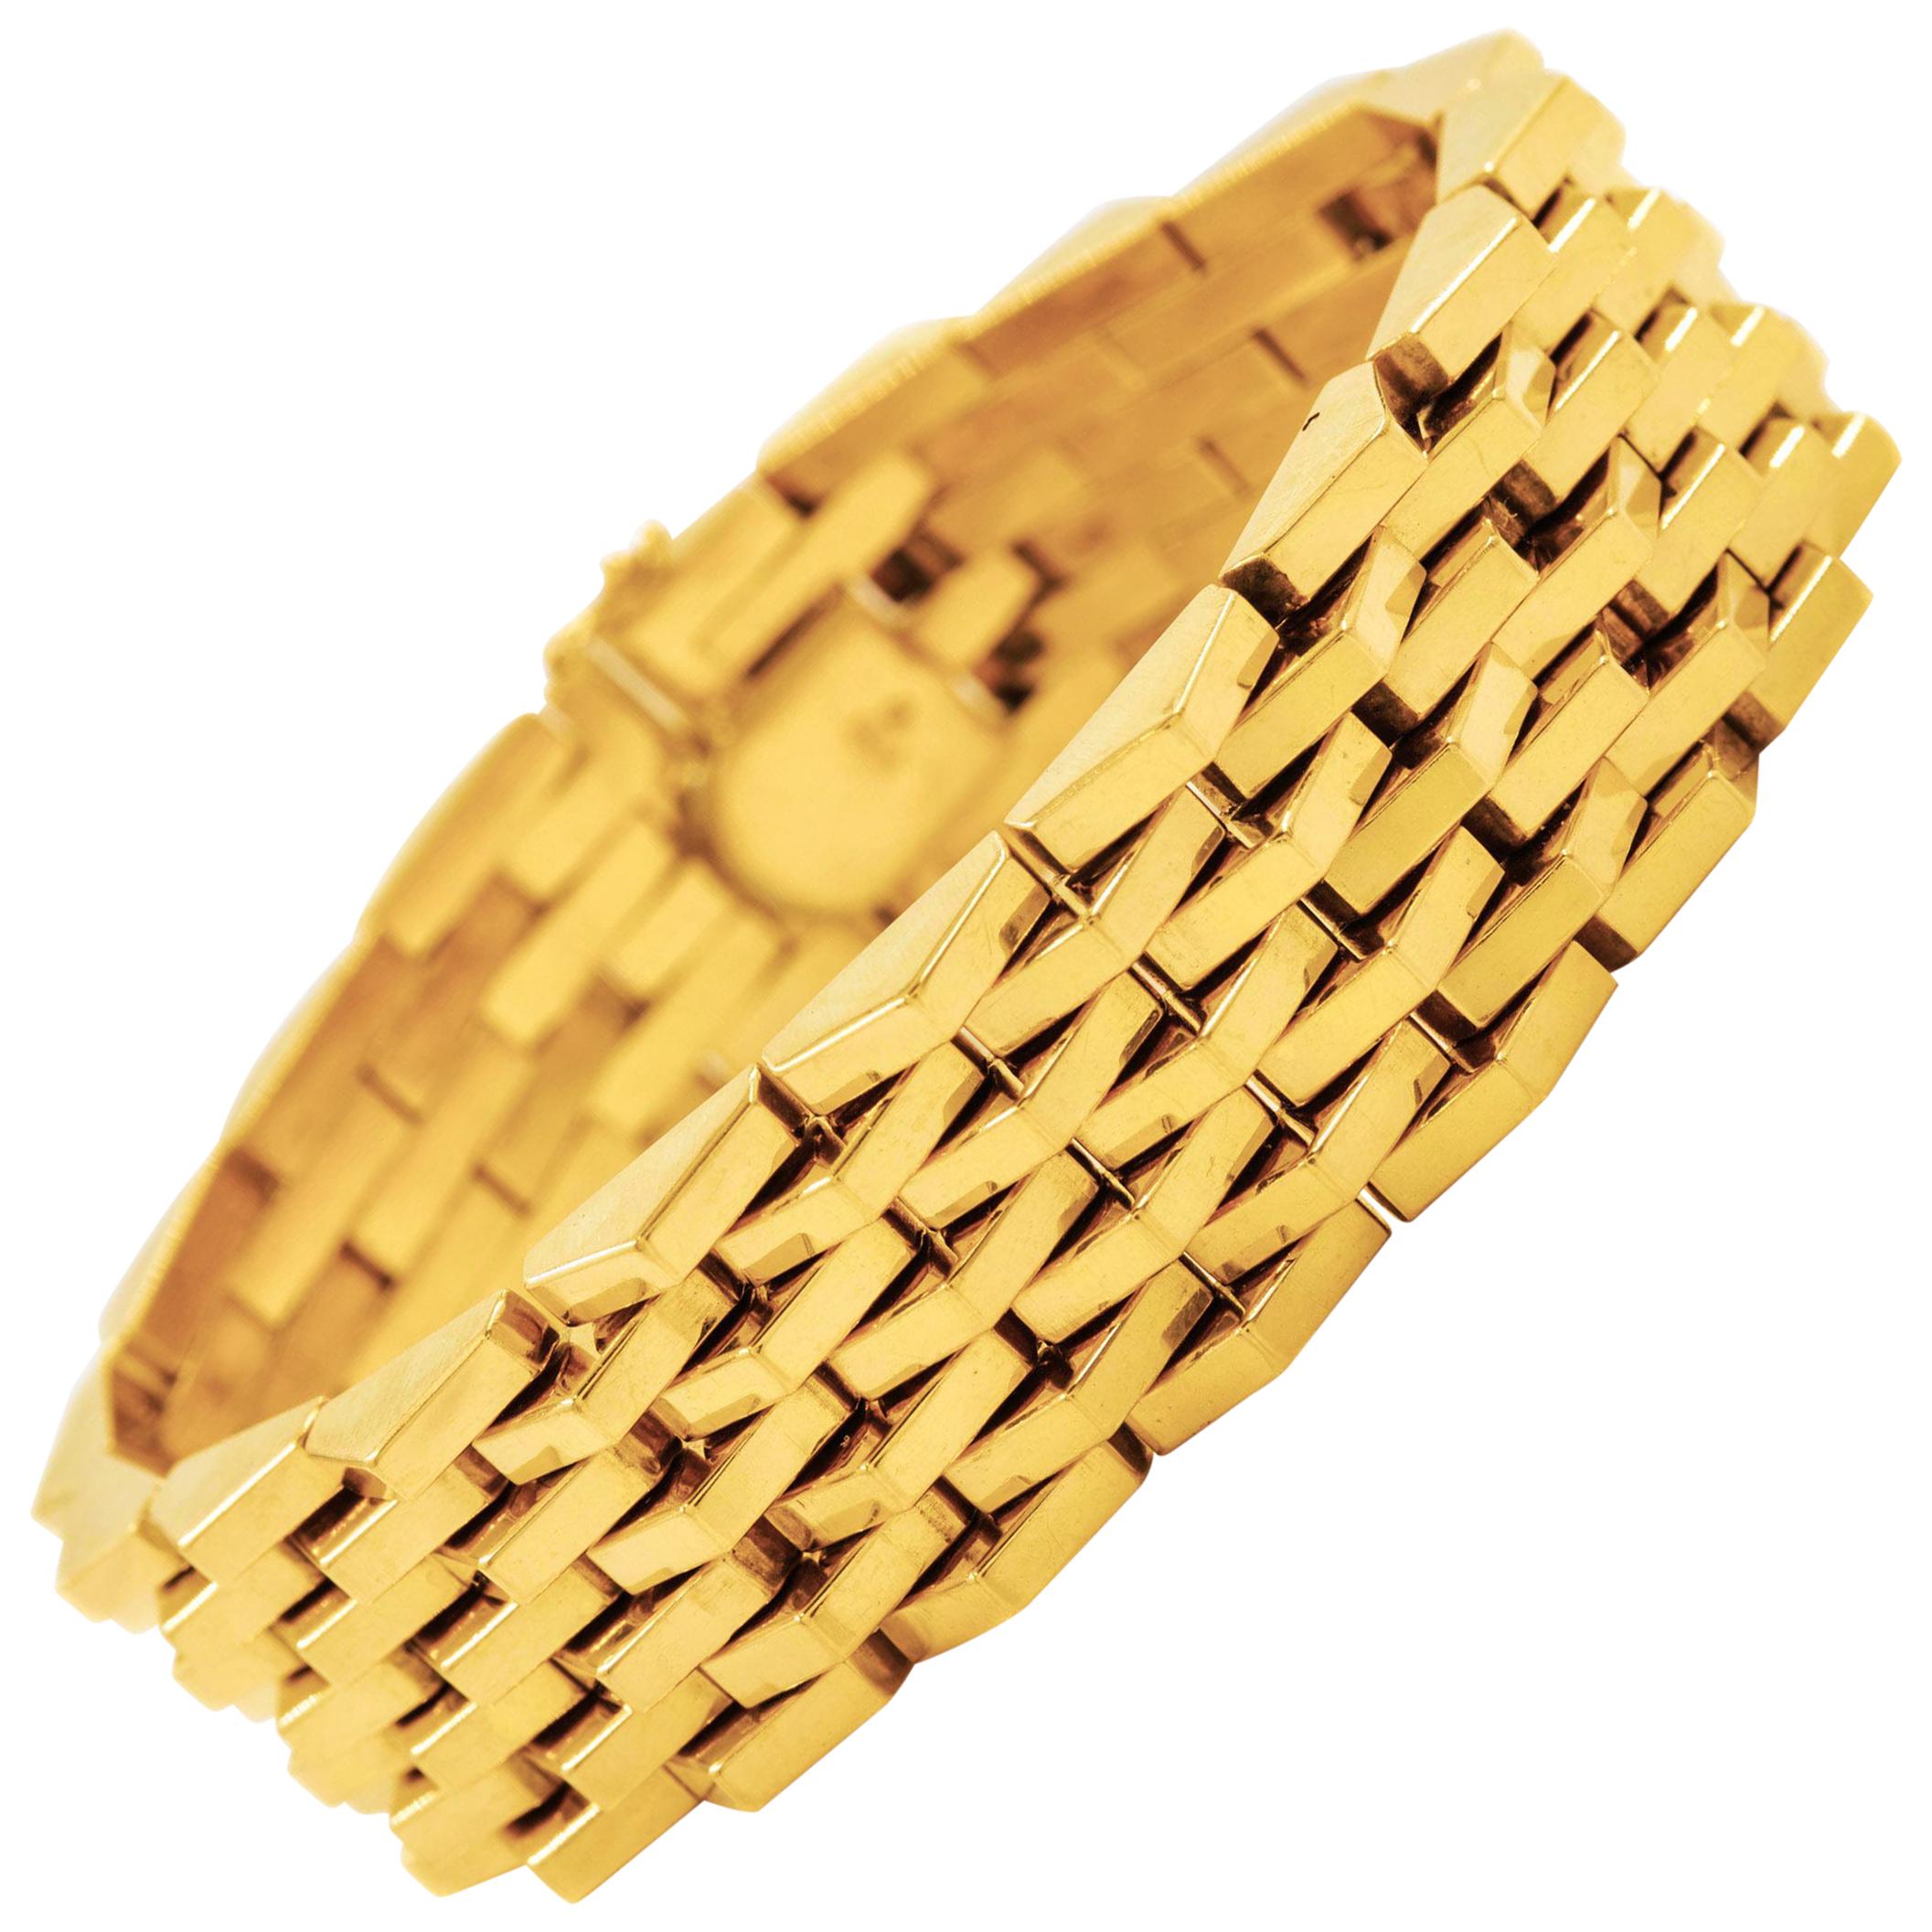 Solid 18k Yellow Gold Bracelet with Pentagonal Links, 7 1/4" L